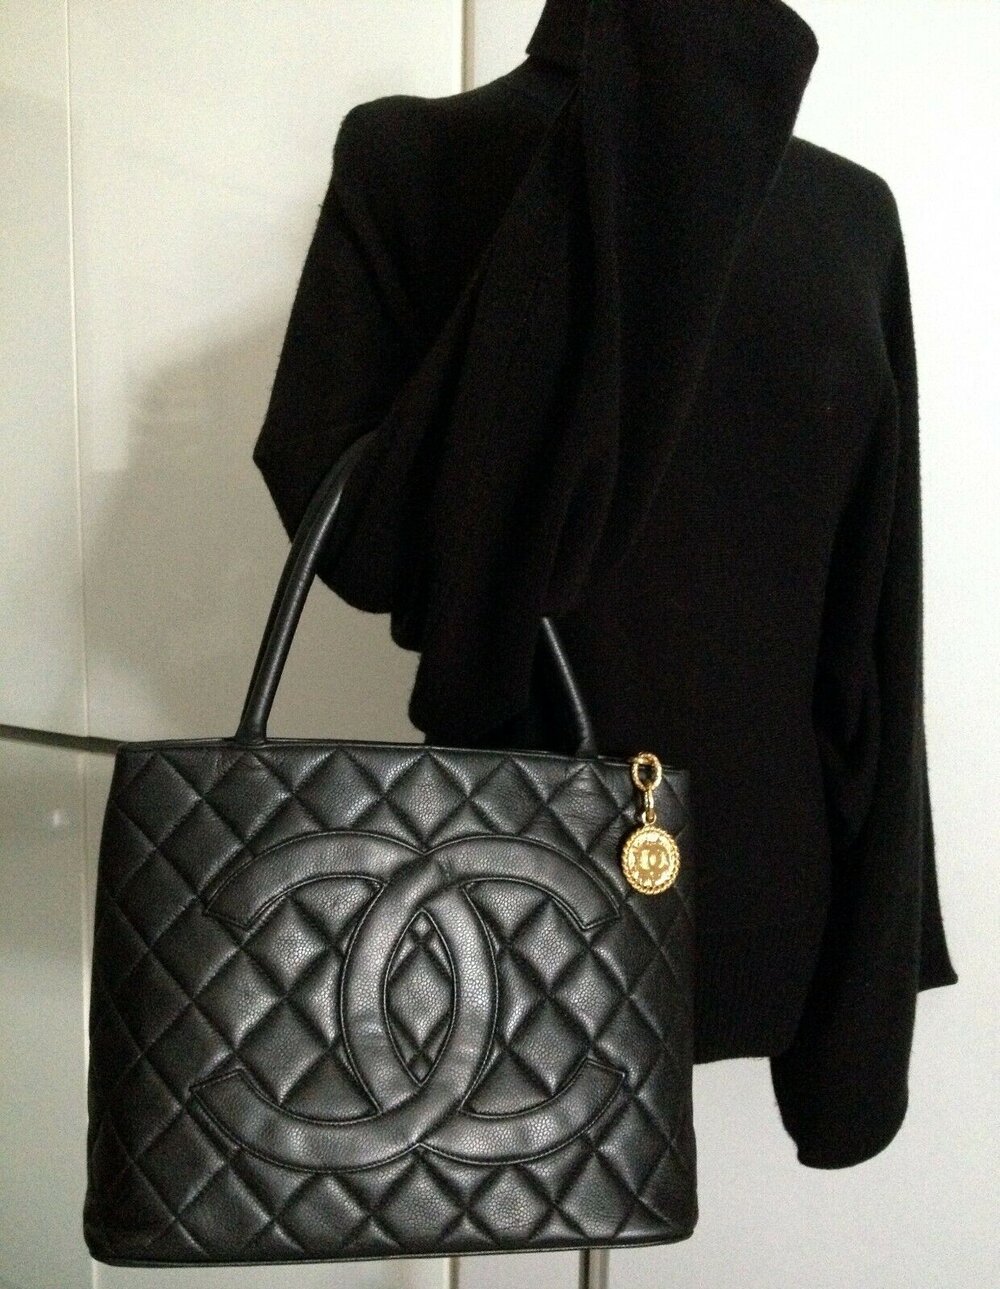 Chanel Classic medium bag